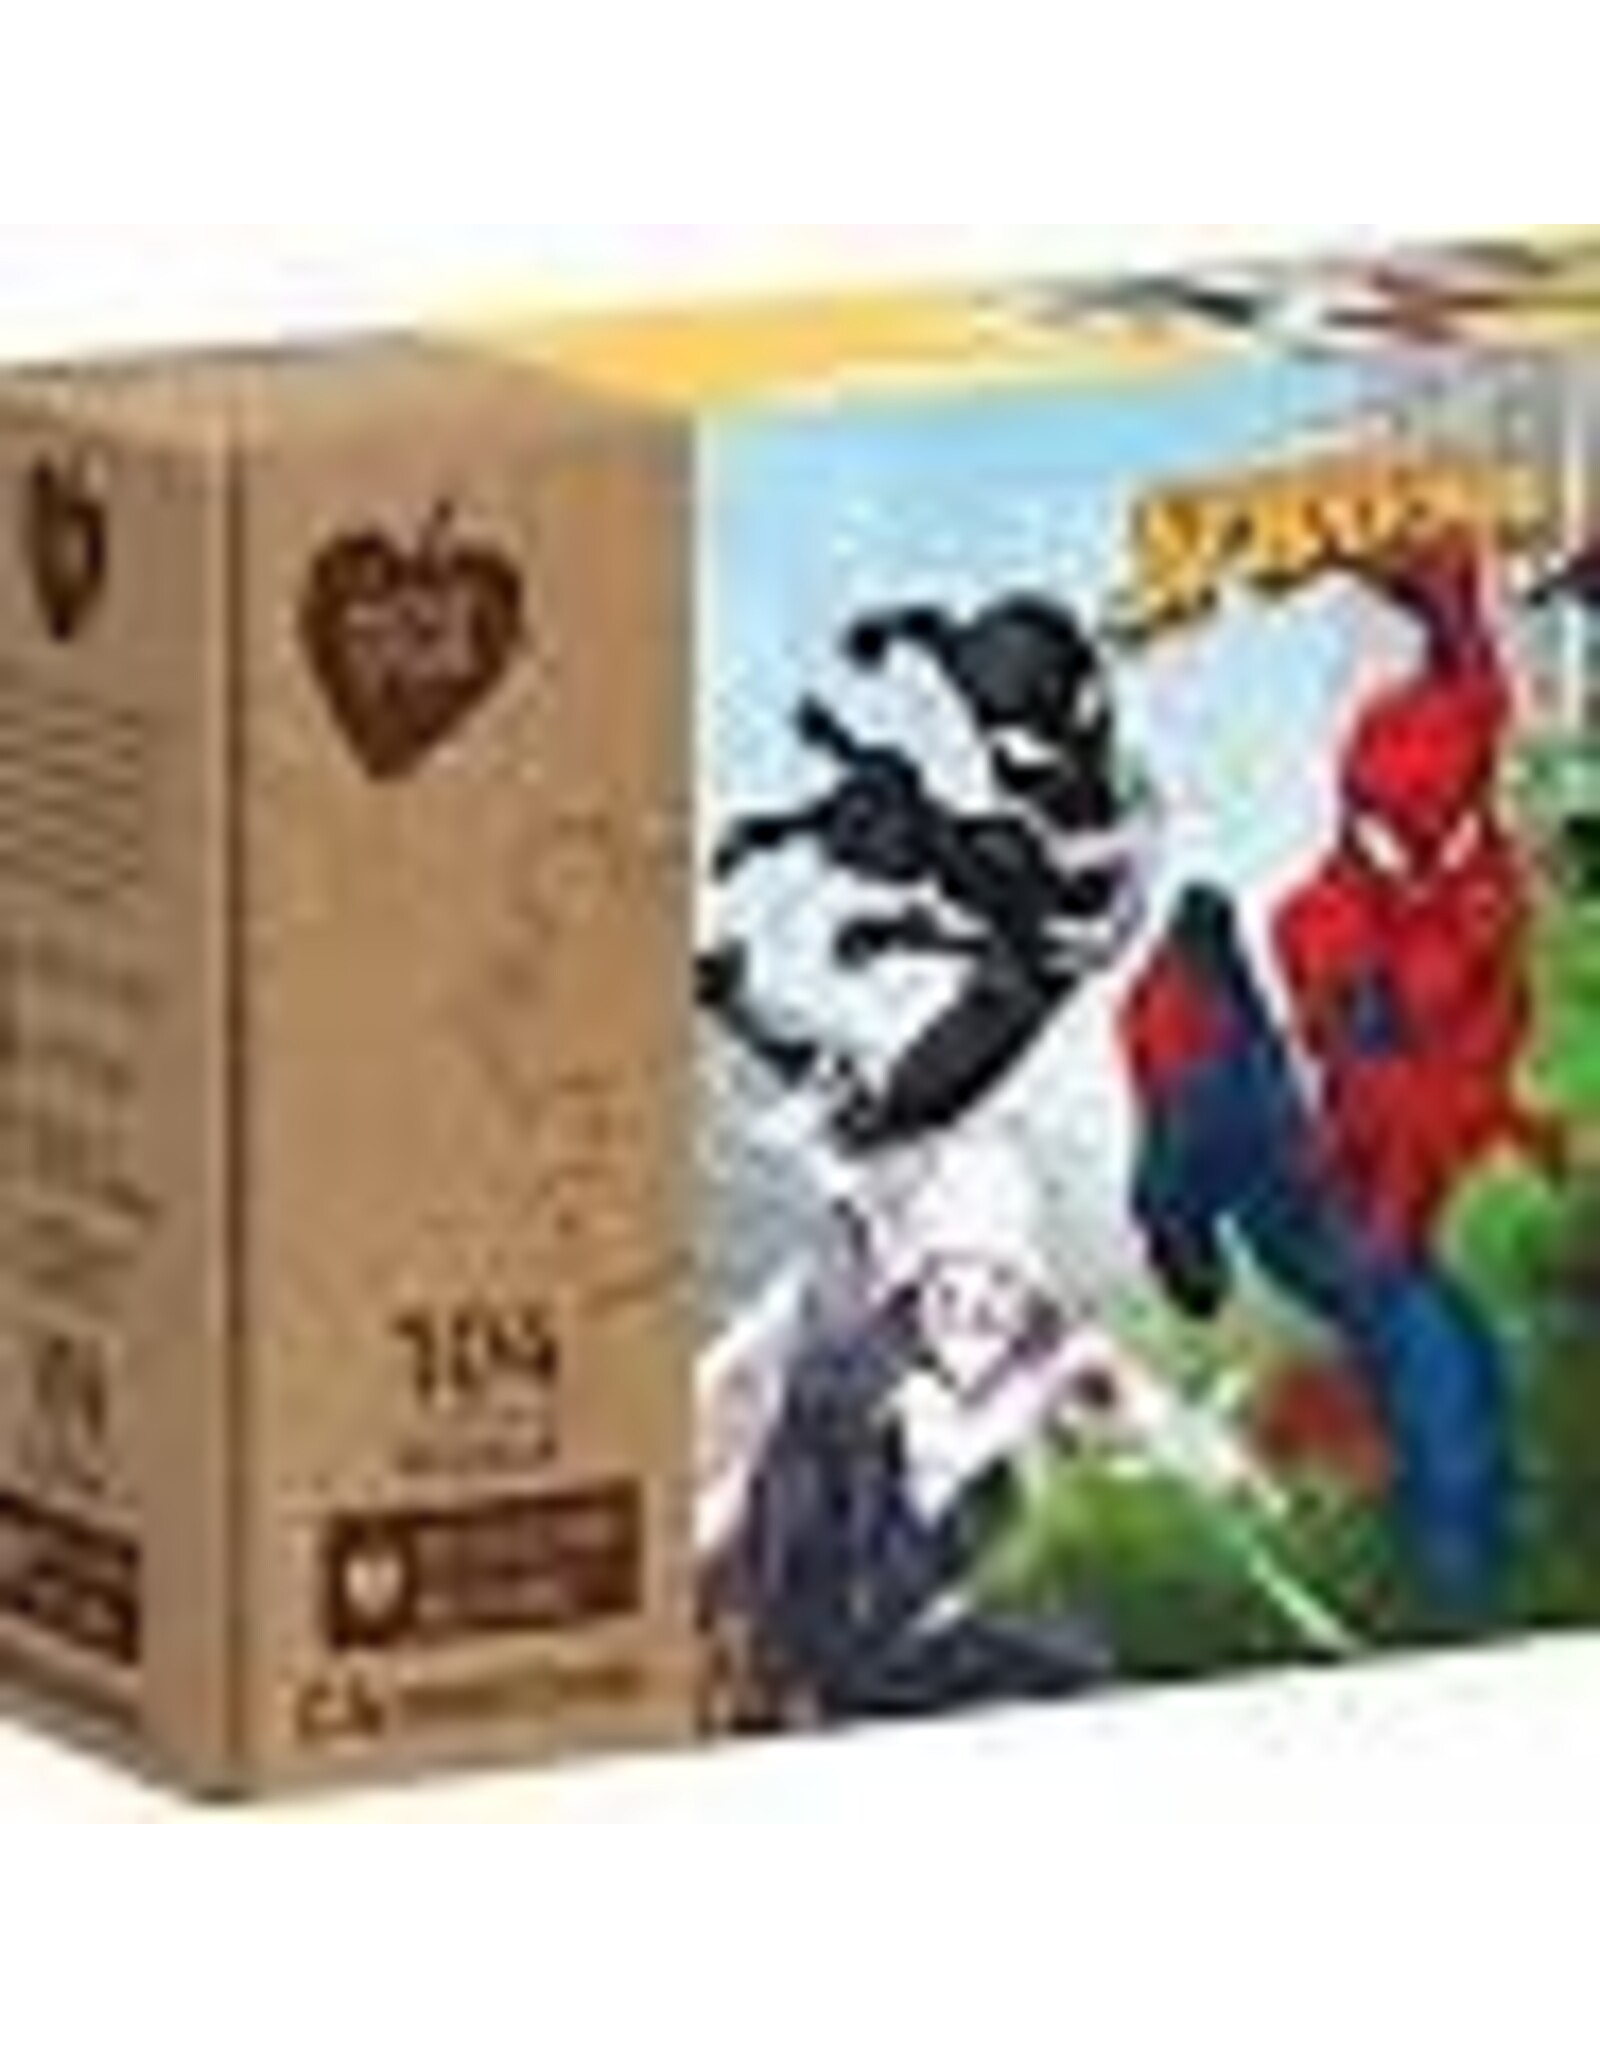 MARVEL Clementoni - Puzzel 104 Stukjes Marvel Kinderpuzzels, 6-8 jaar, 27151 Play For Future